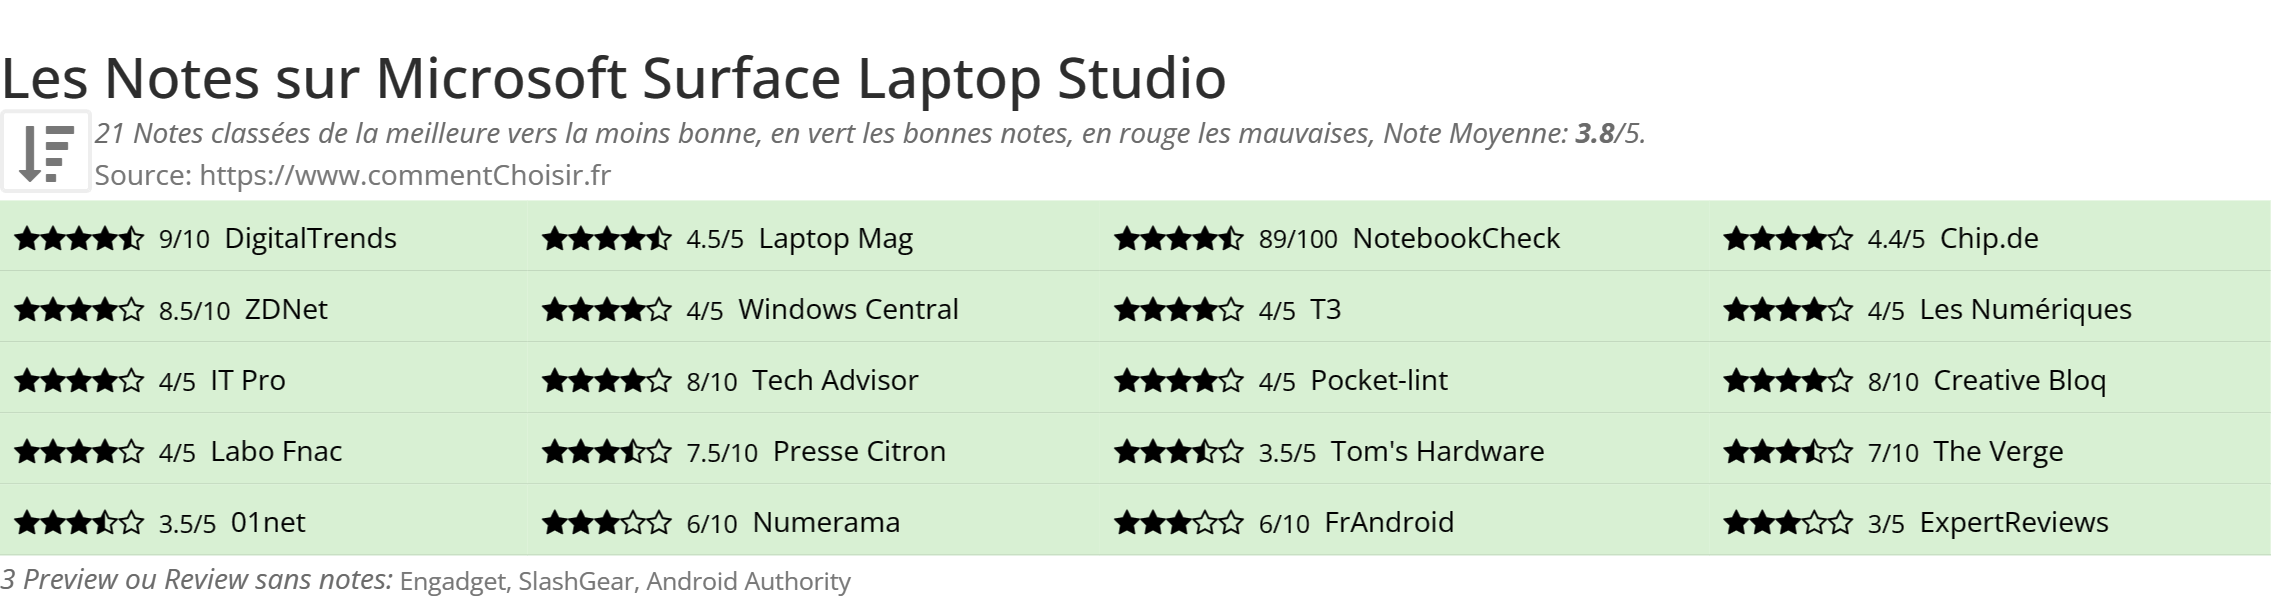 Ratings Microsoft Surface Laptop Studio